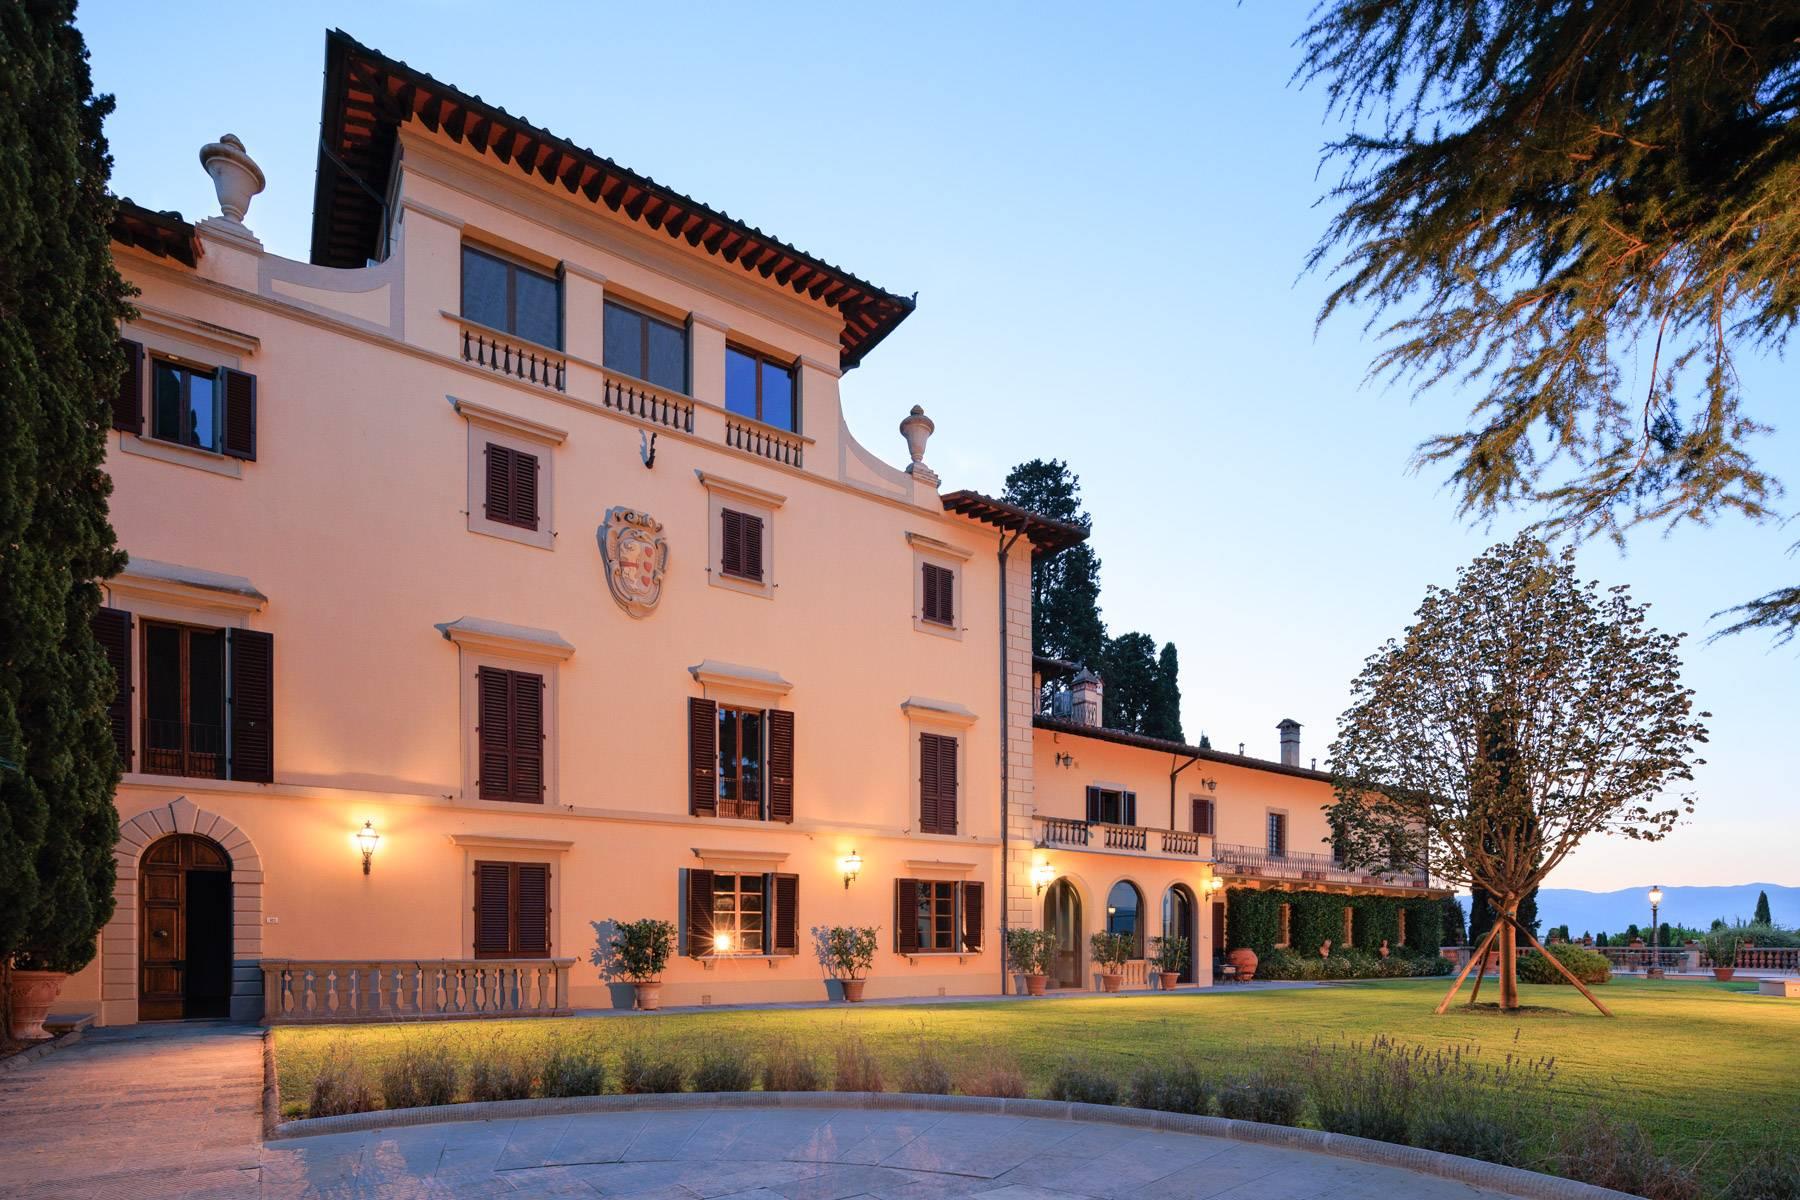 Apartment in a historic villa on the hills of Carmignano - 29